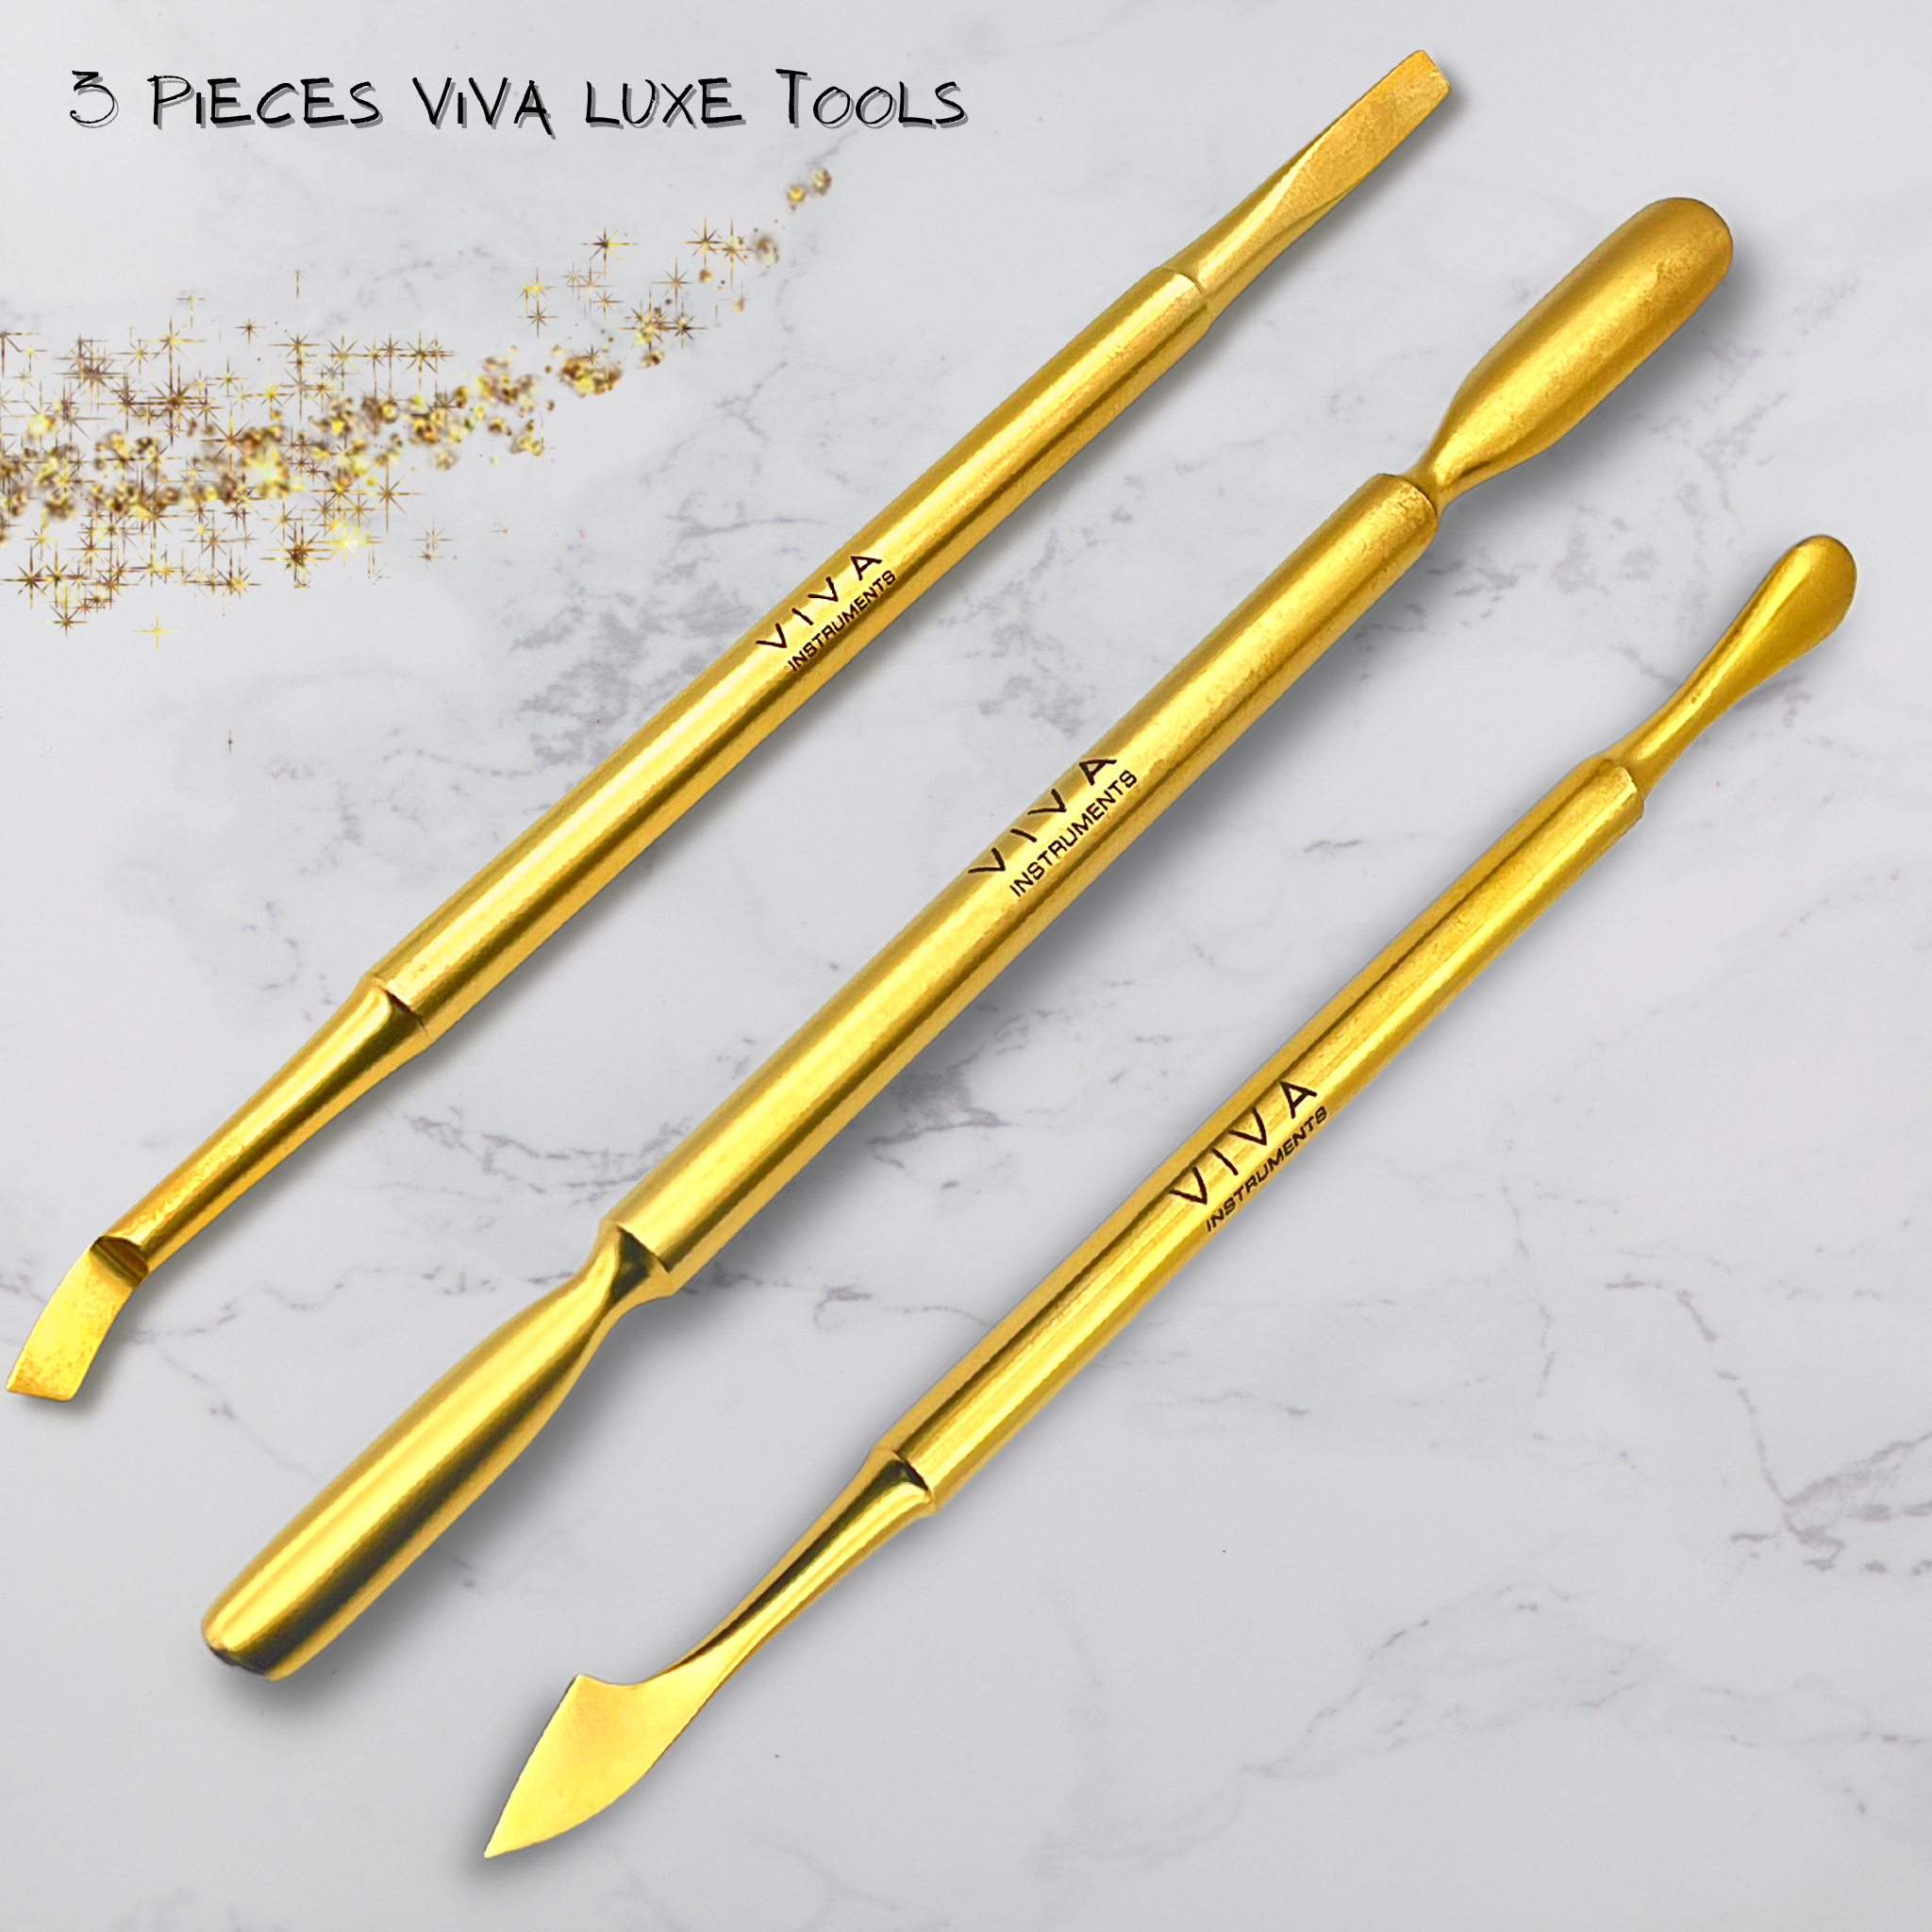 CUTCLE pushers manicure tools gold - viva instruments 